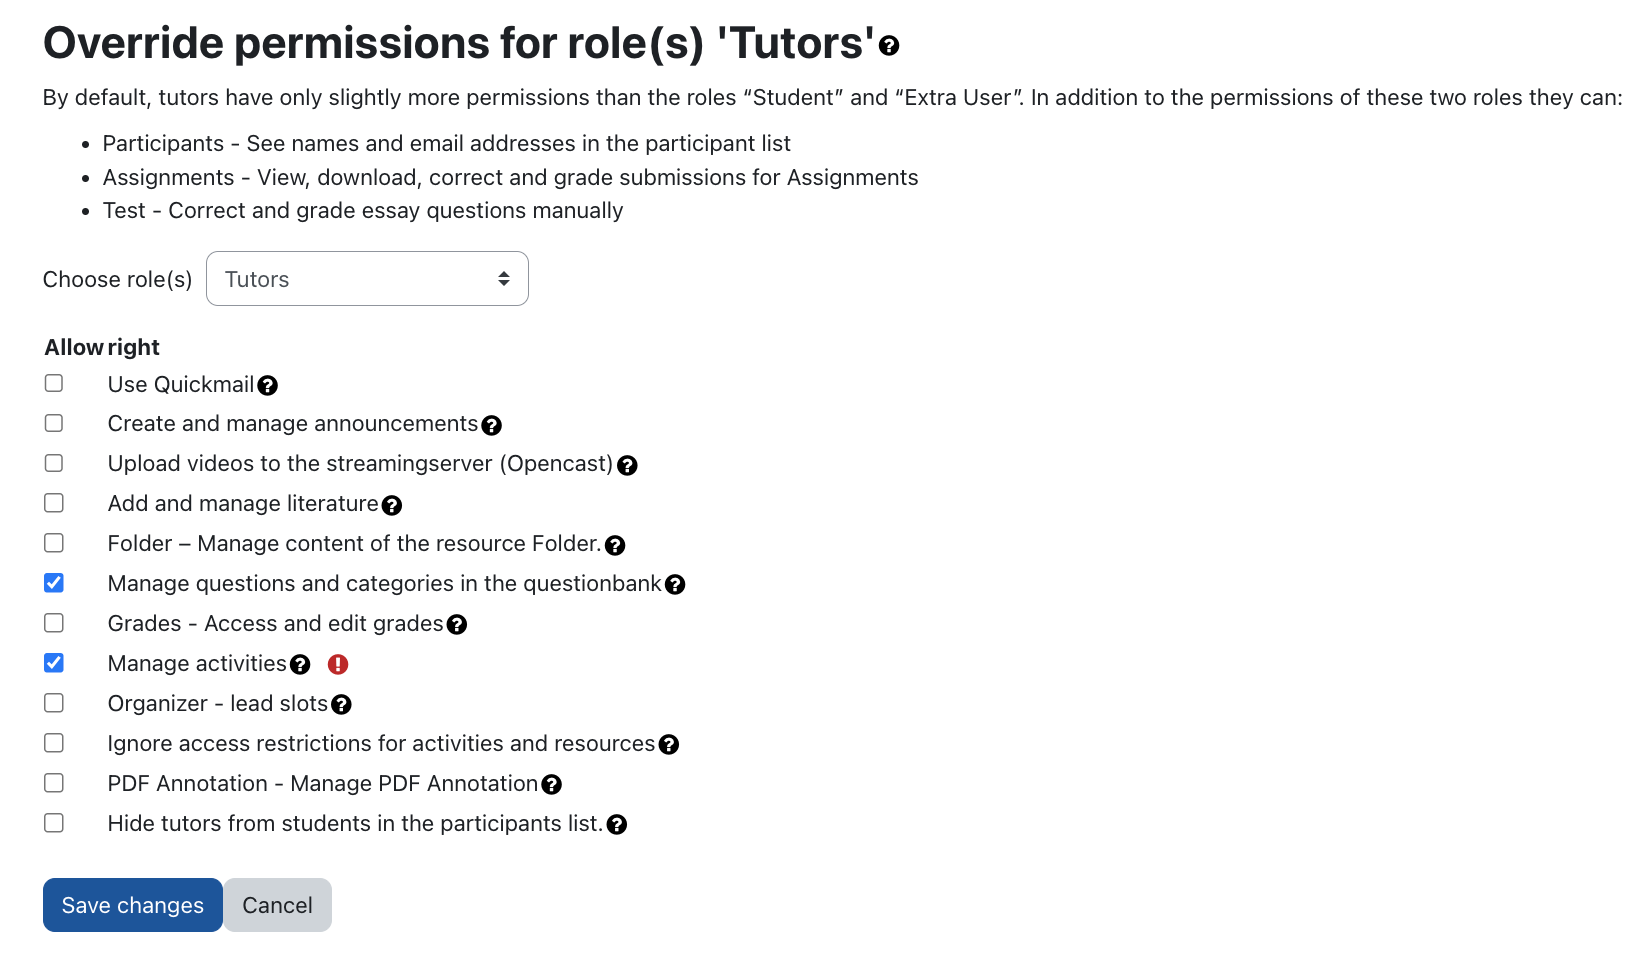 Permissions for role tutors